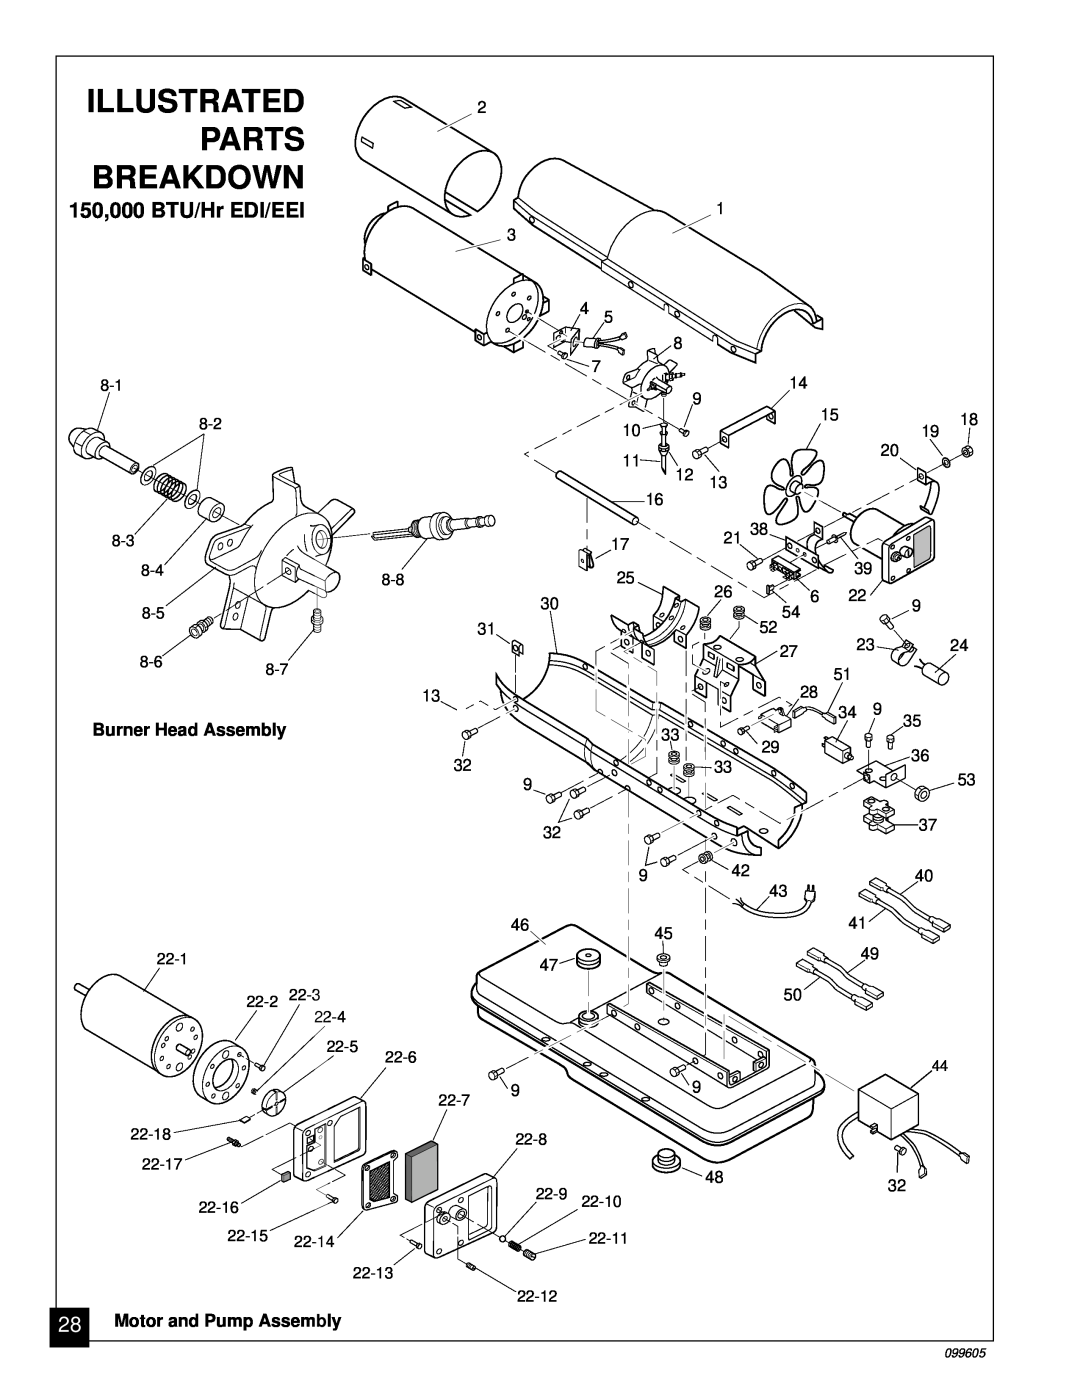 Desa H.S.I. Series Illustrated, 150,000 BTU/Hr EDI/EEI, Parts, Breakdown, Burner Head Assembly, 28Motor and Pump Assembly 